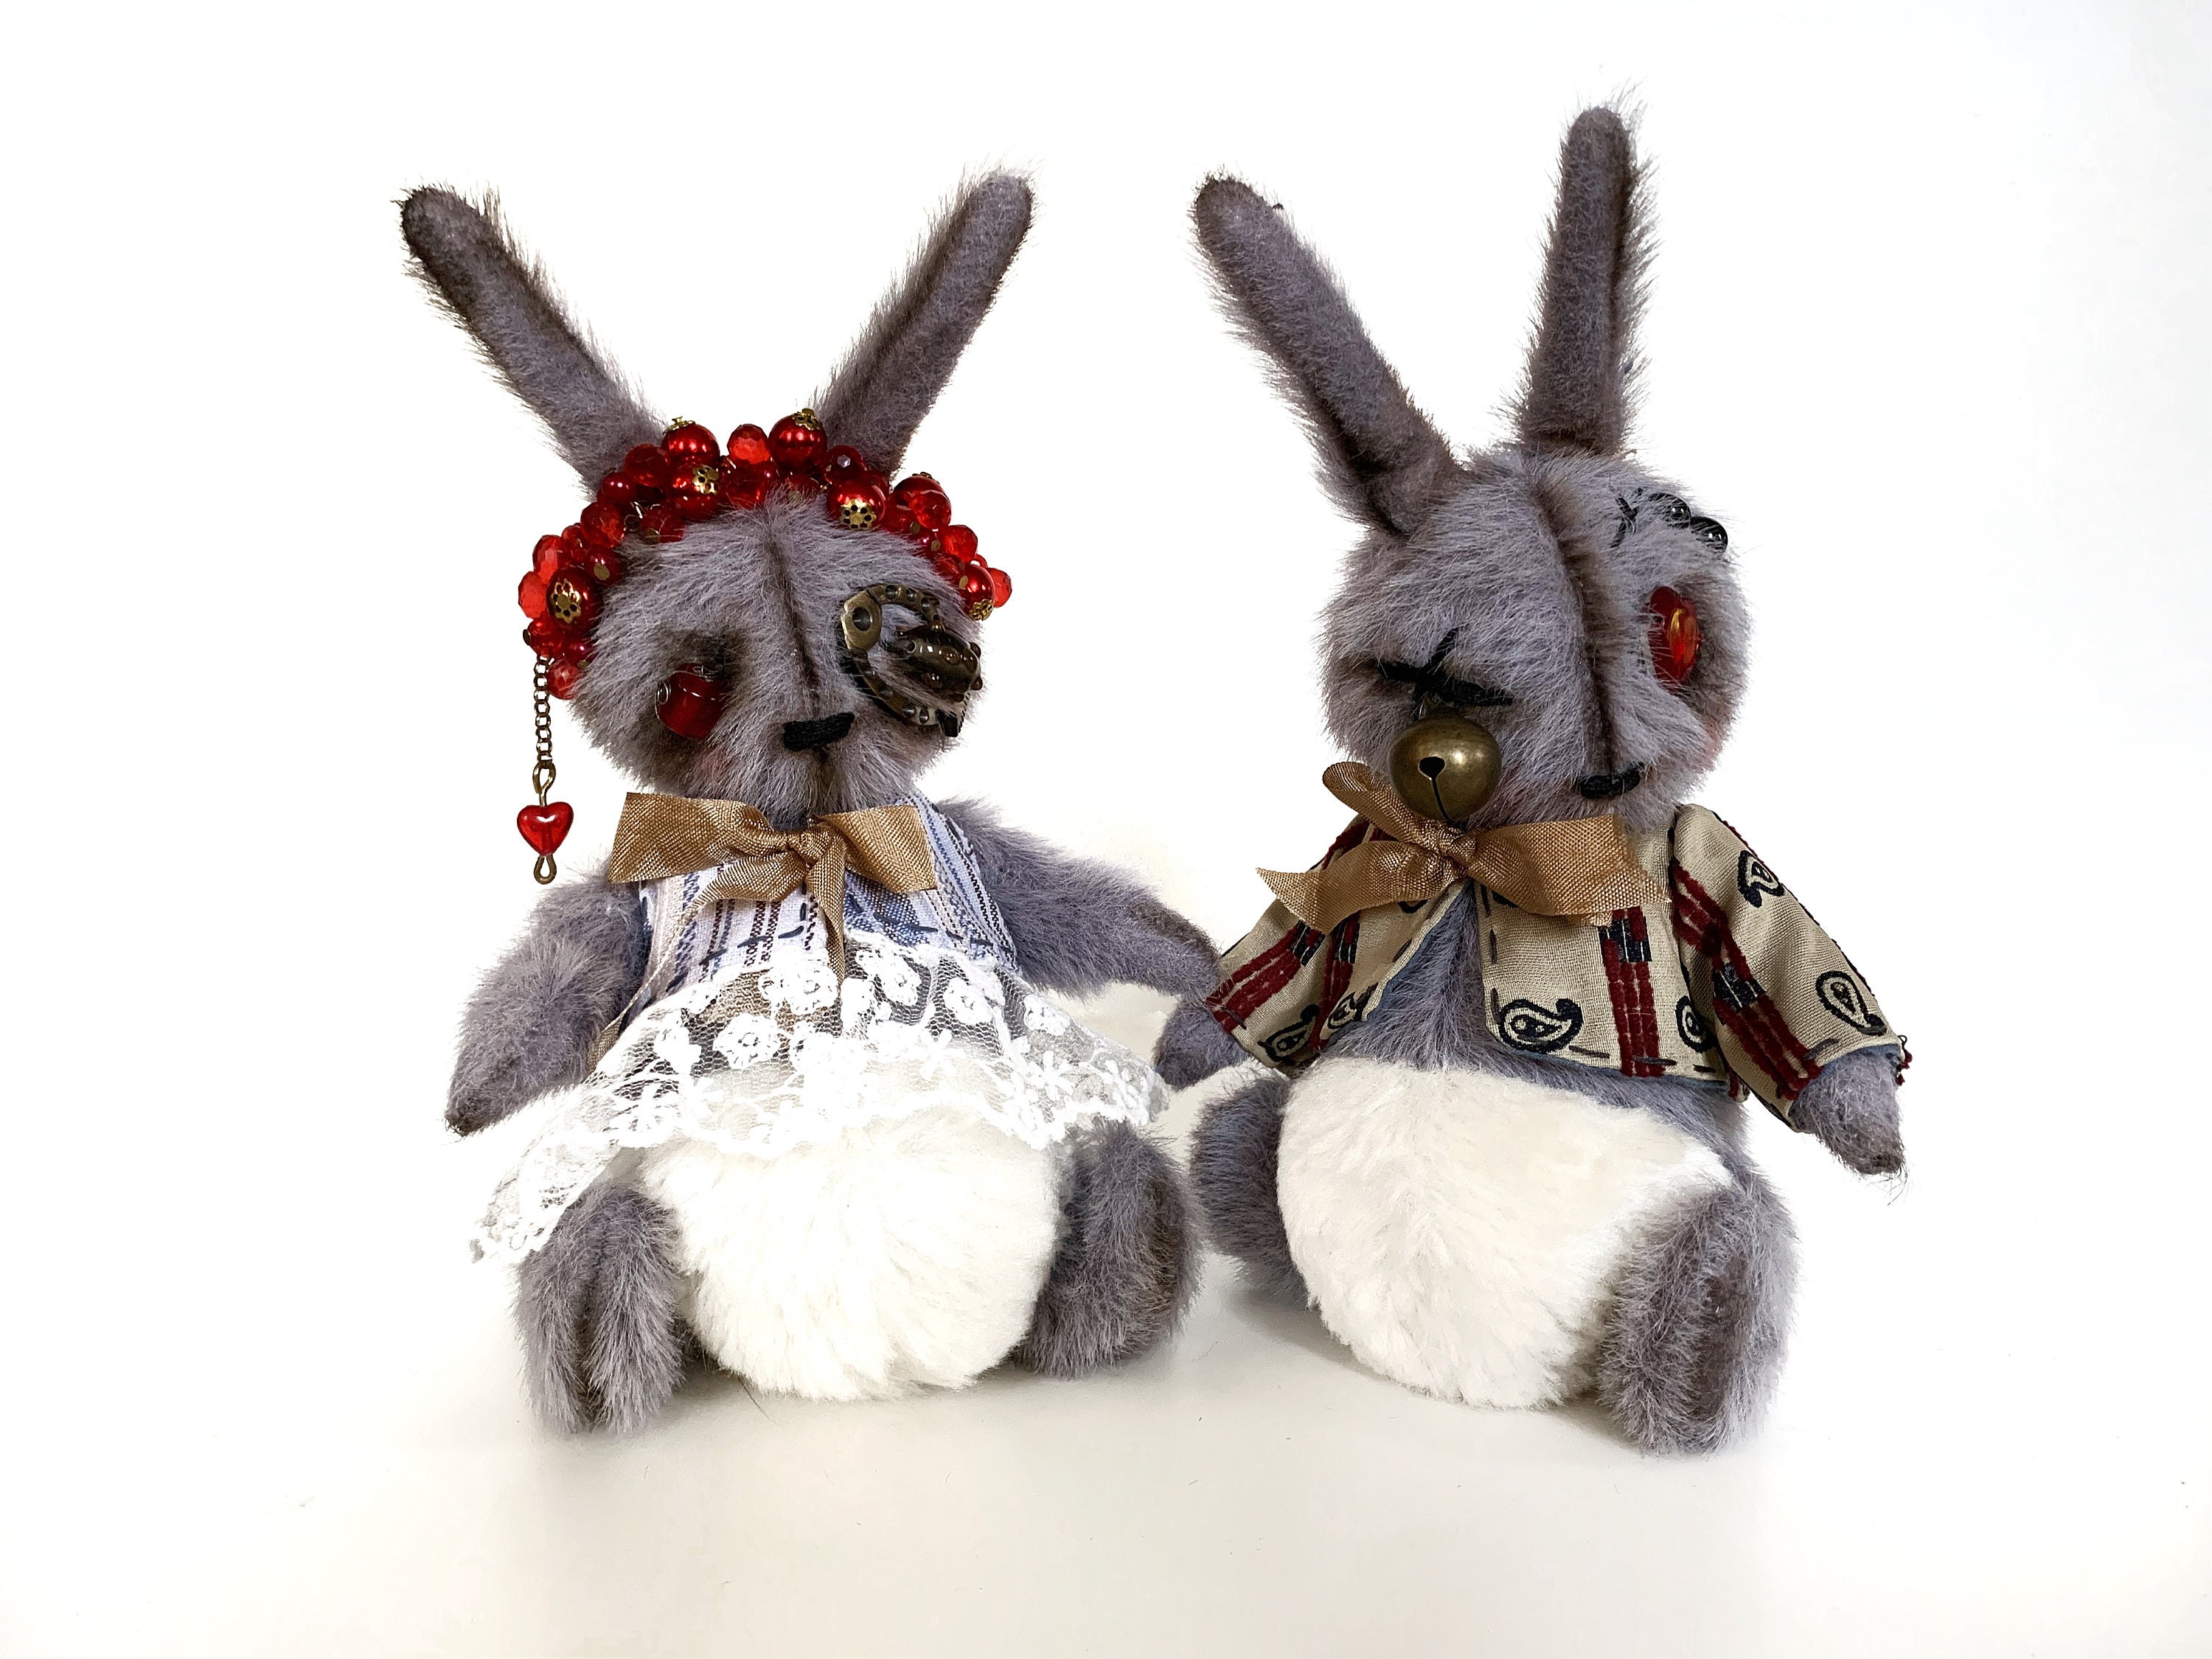 Handmade Art Doll, Creepy Cute Bunny Stuffed Animal, Goth de